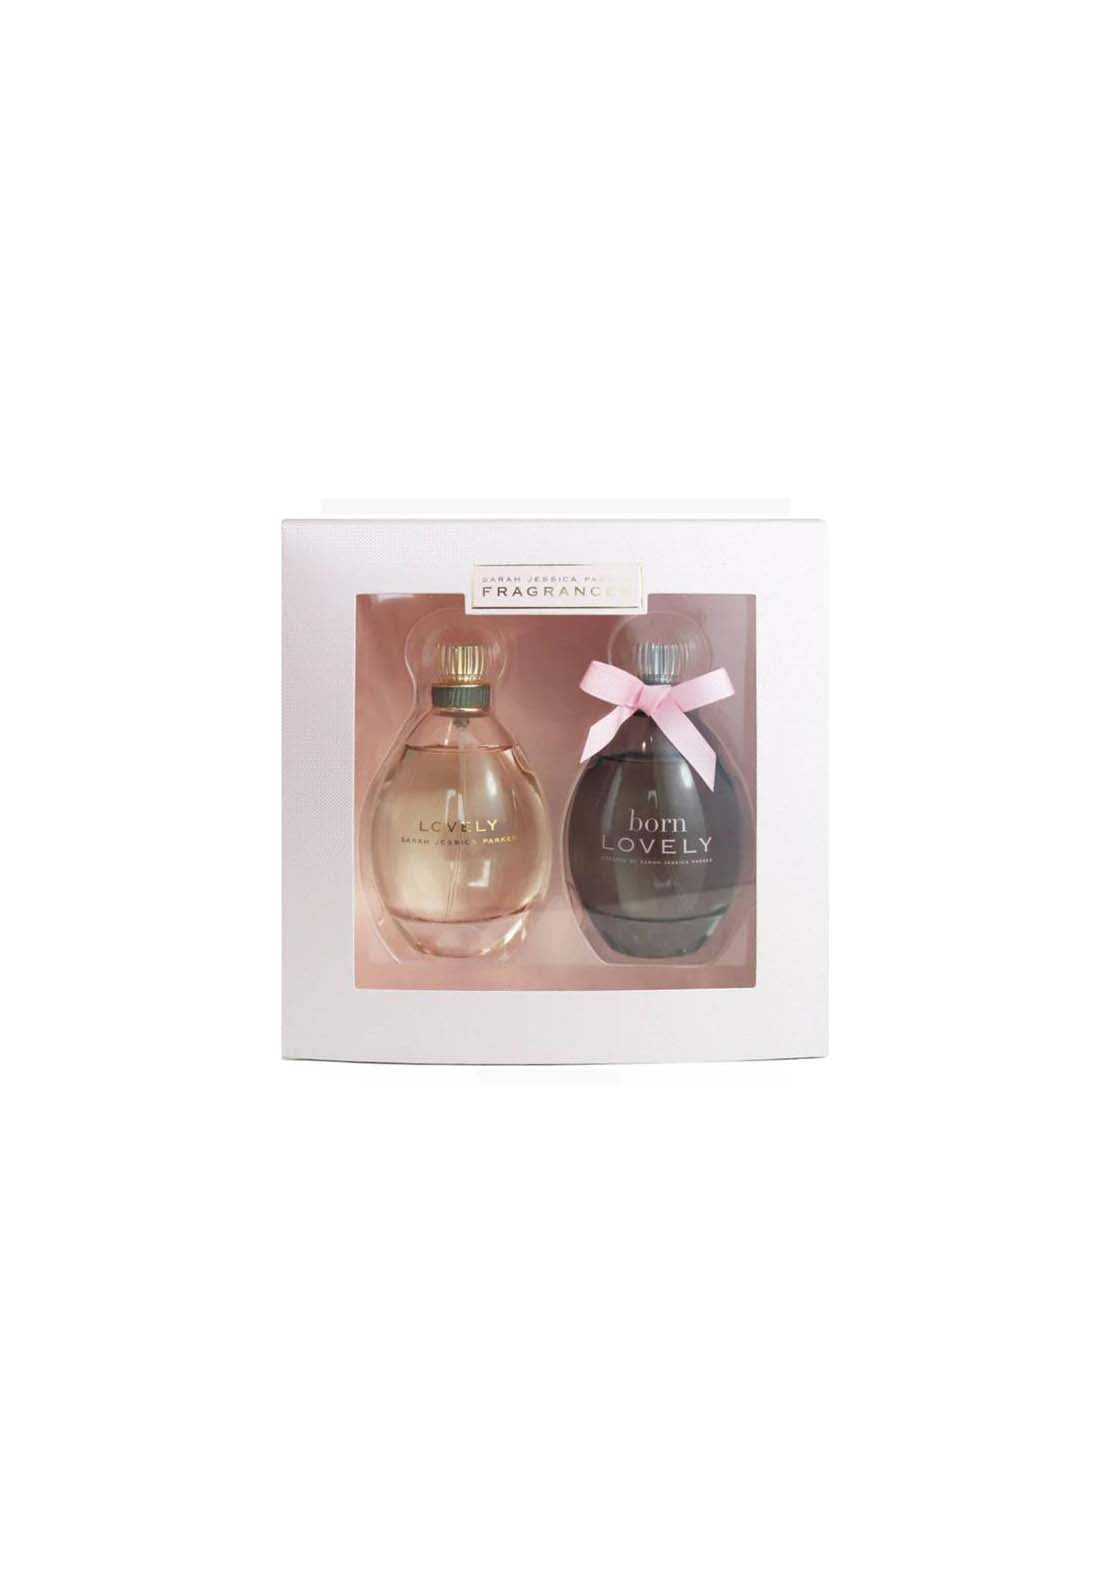 Sarah Jessica Parker SJP Lovely 100ml Eau de Parfum Born Lovely Gift Set 1 Shaws Department Stores